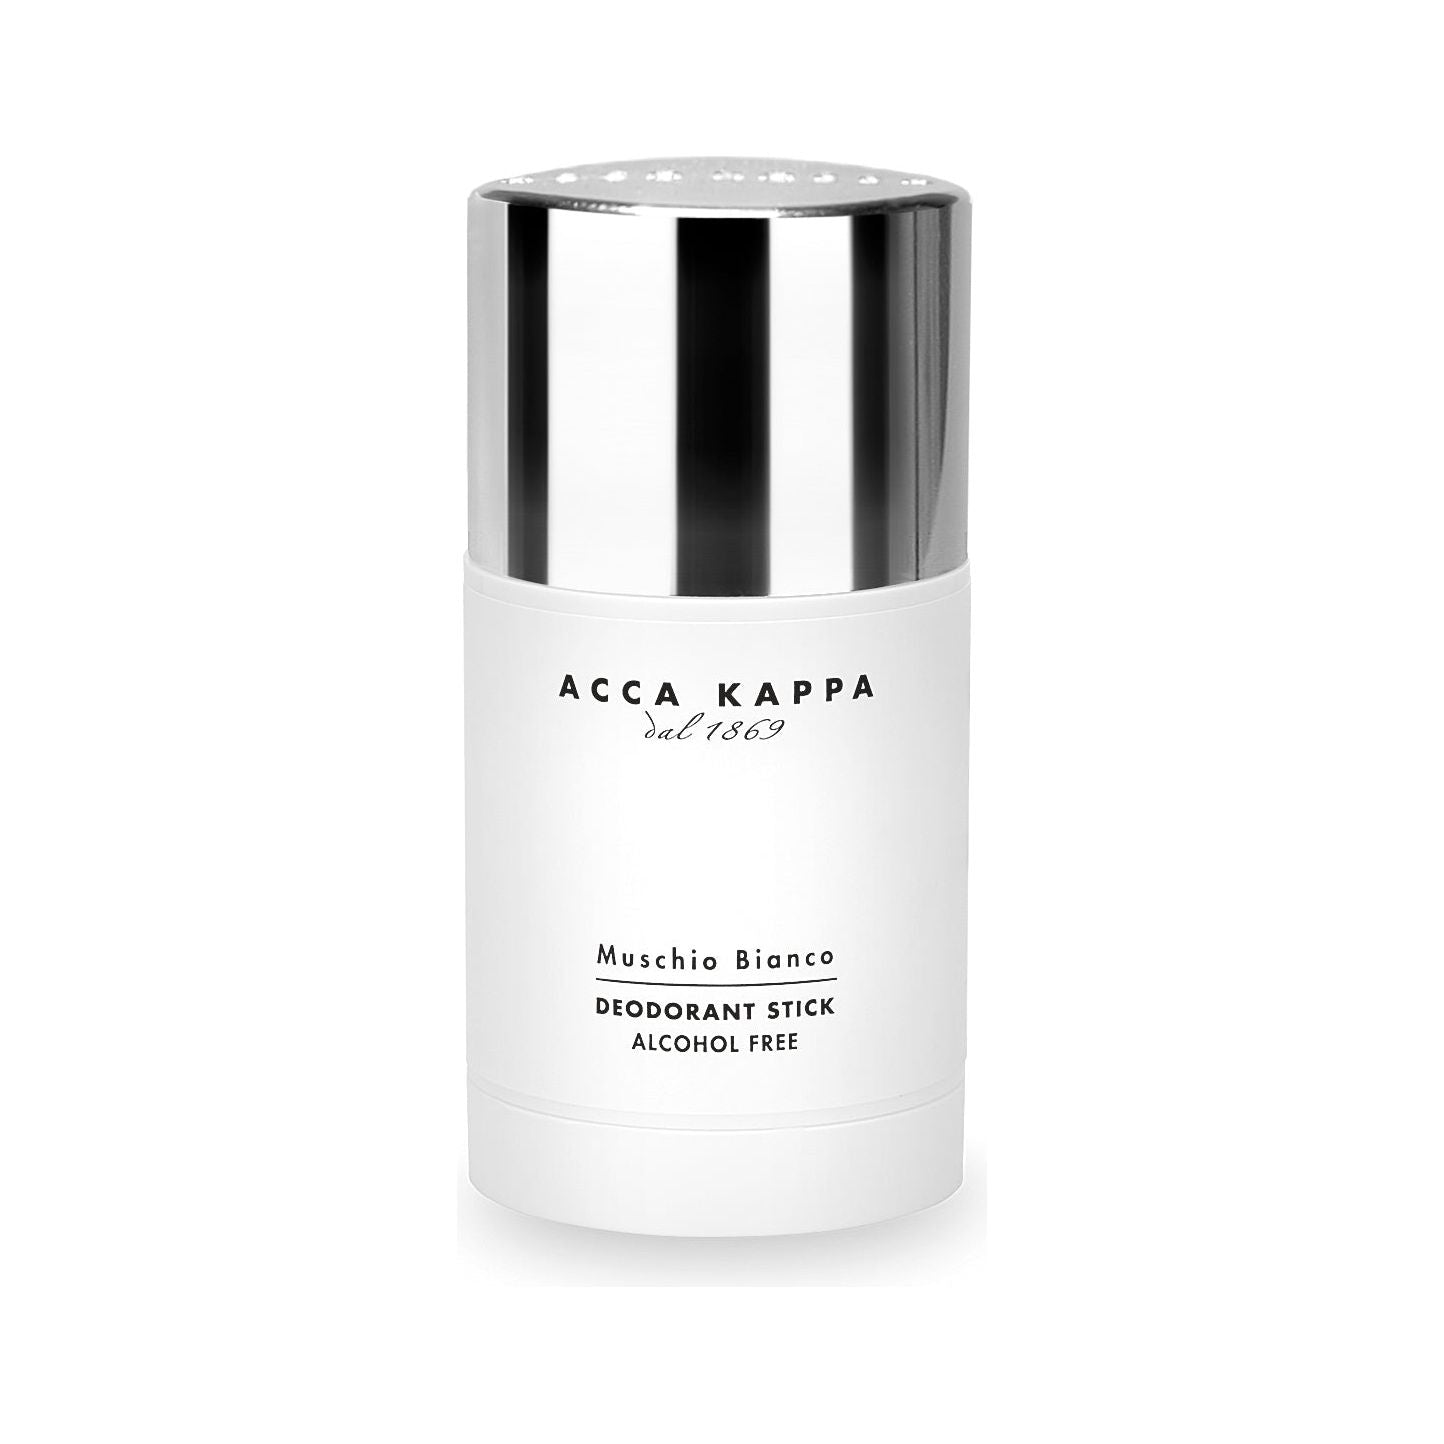 Acca Kappa - Deodorant Stick - Muschio Bianco